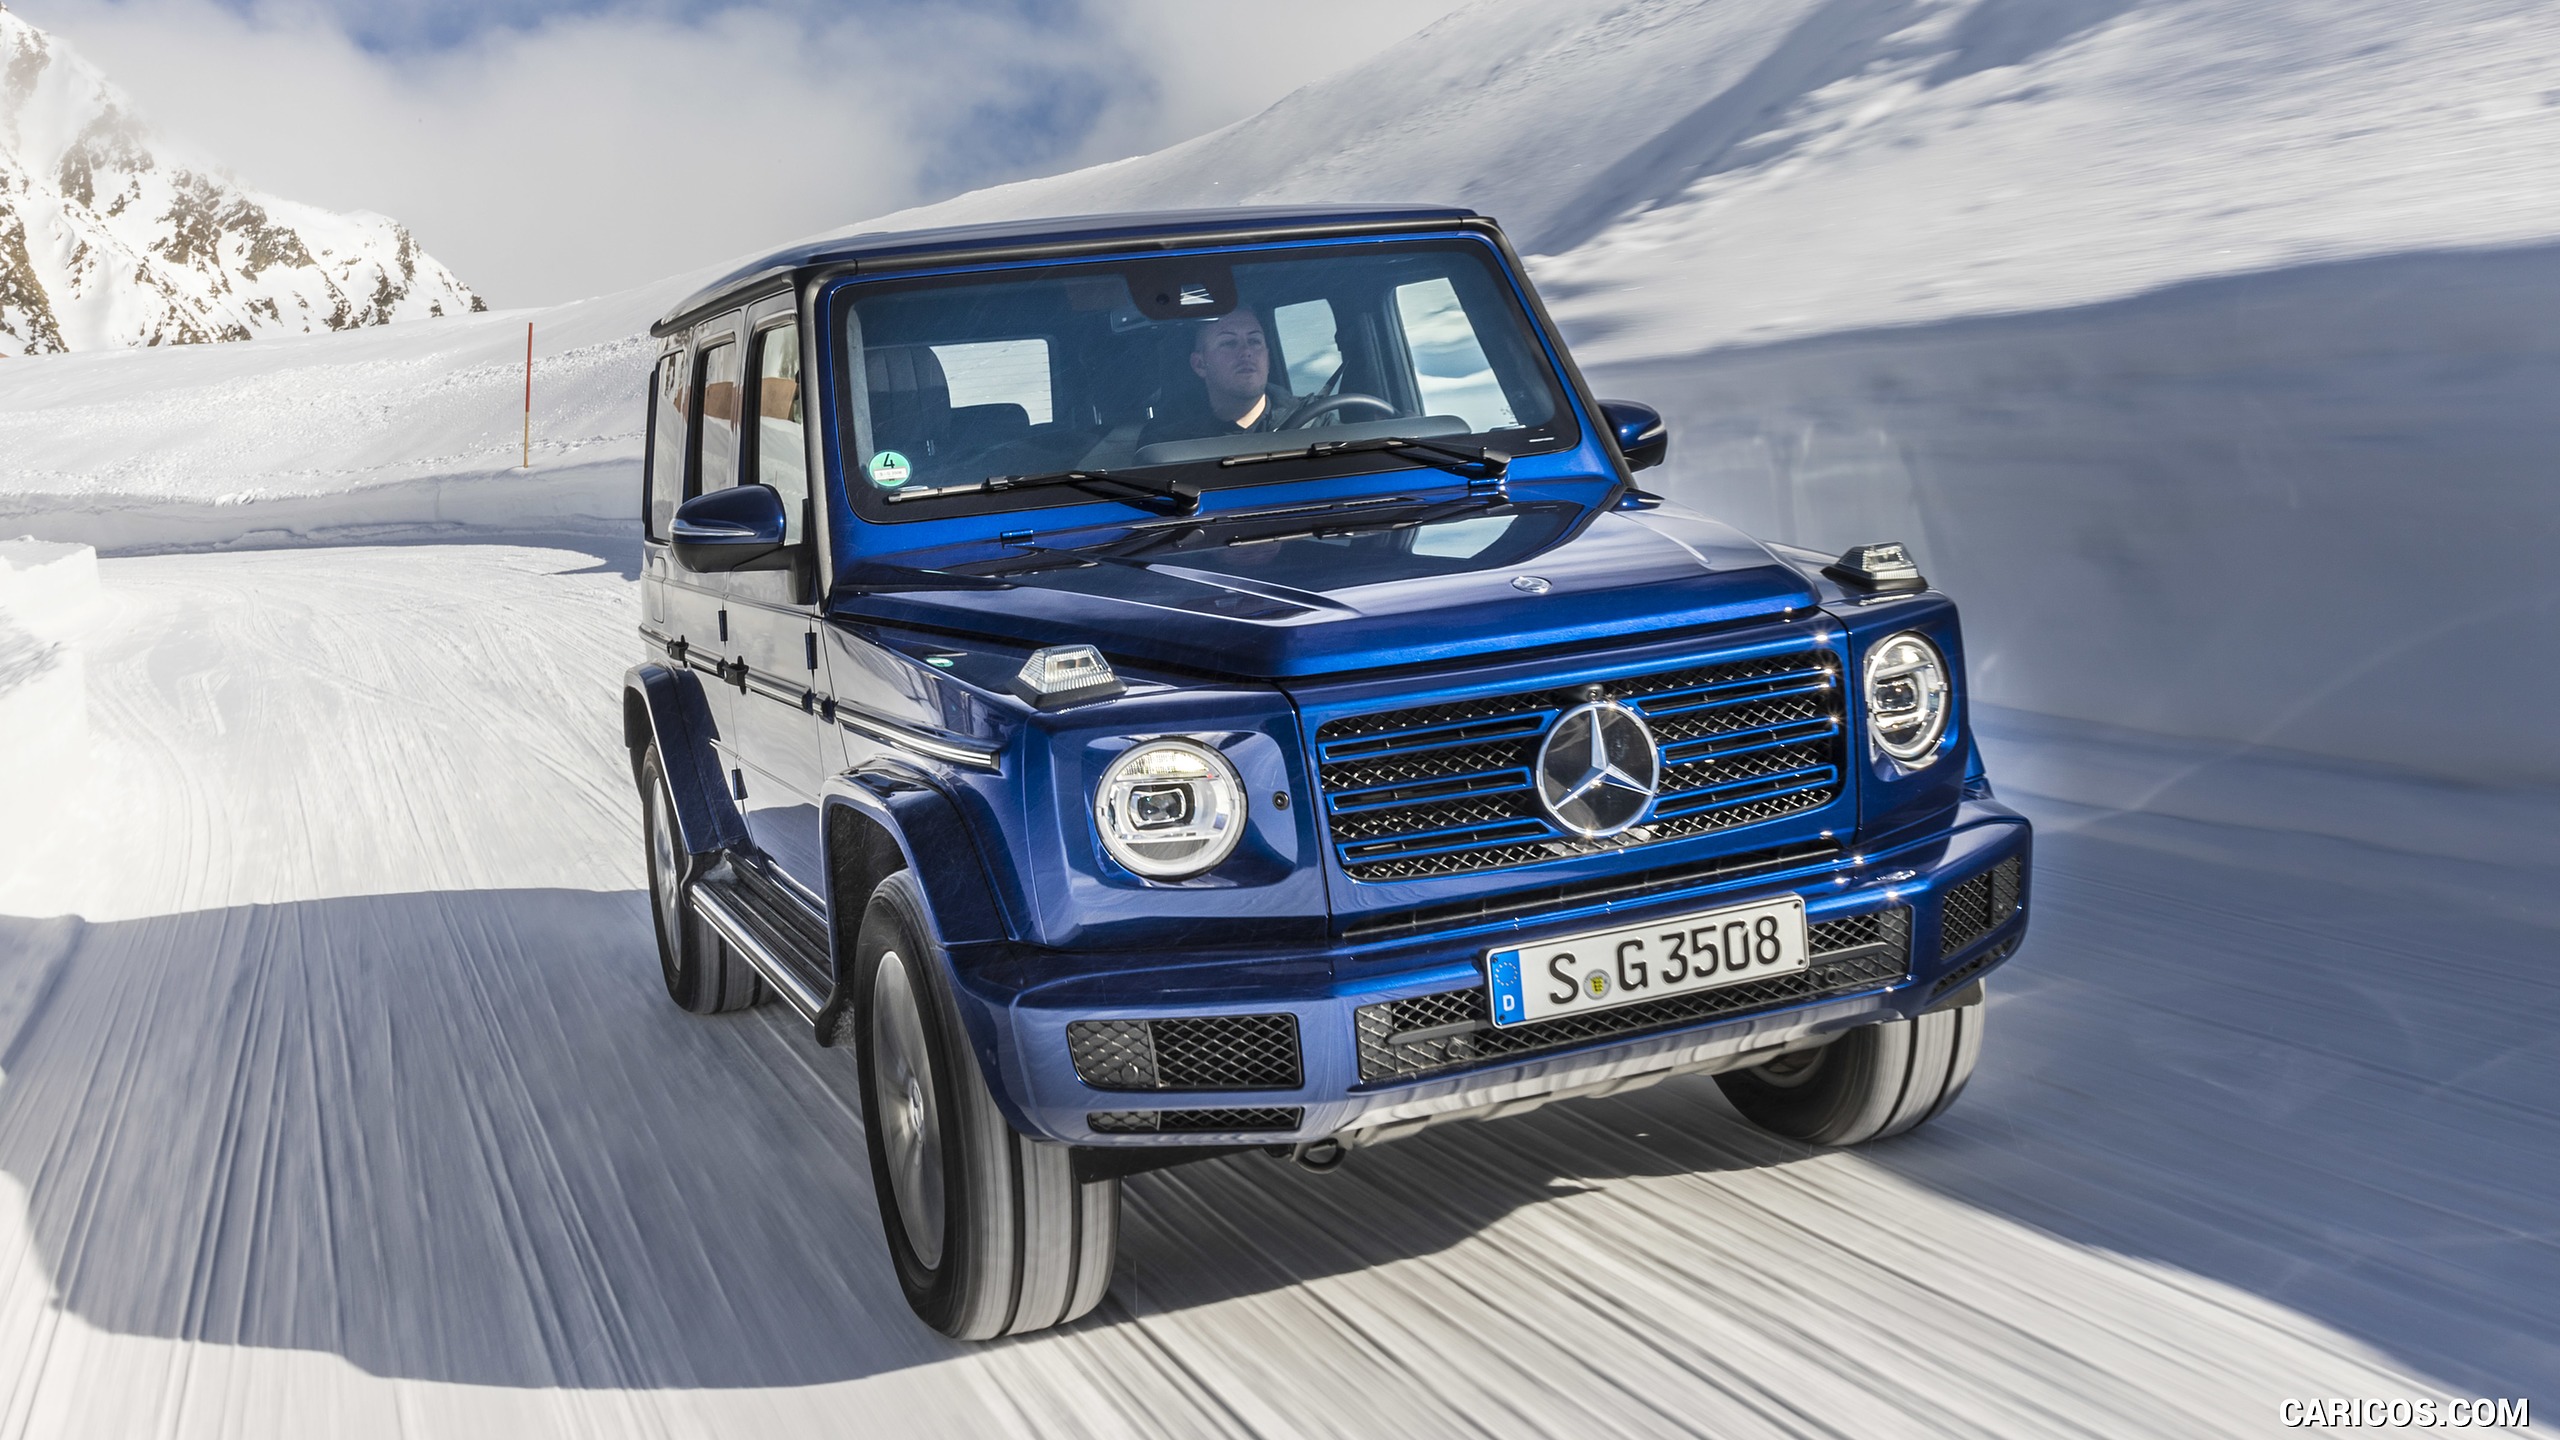 2019 Mercedes-Benz G 350 d (Brilliant Blue Metallic) - In Snow - Front, #26 of 51